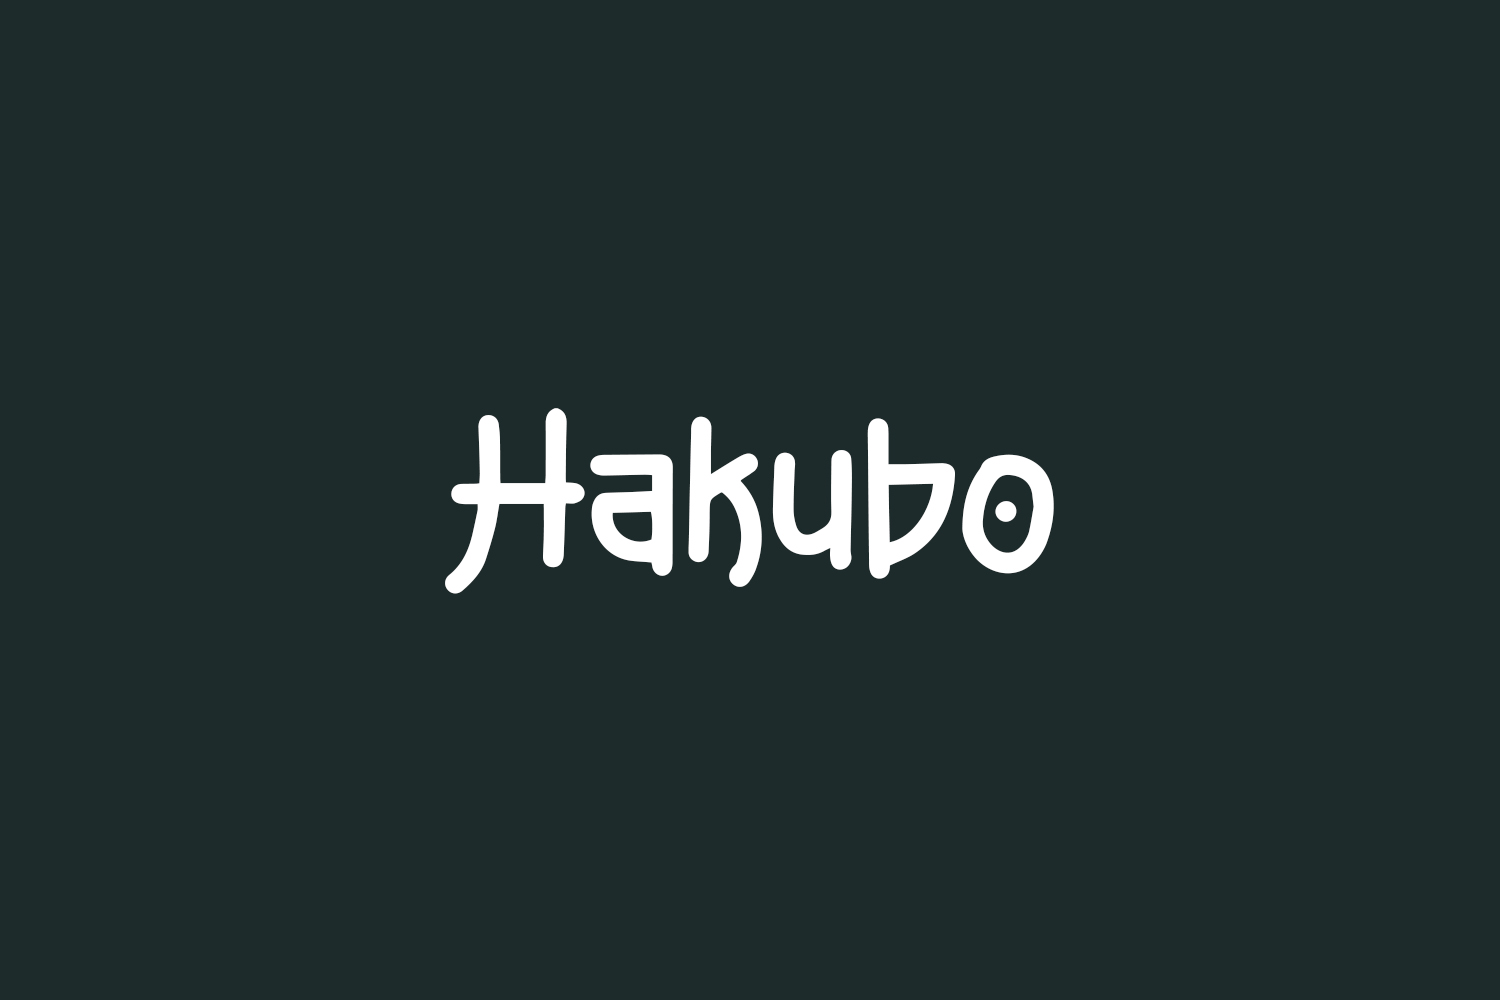 Hakubo Free Font